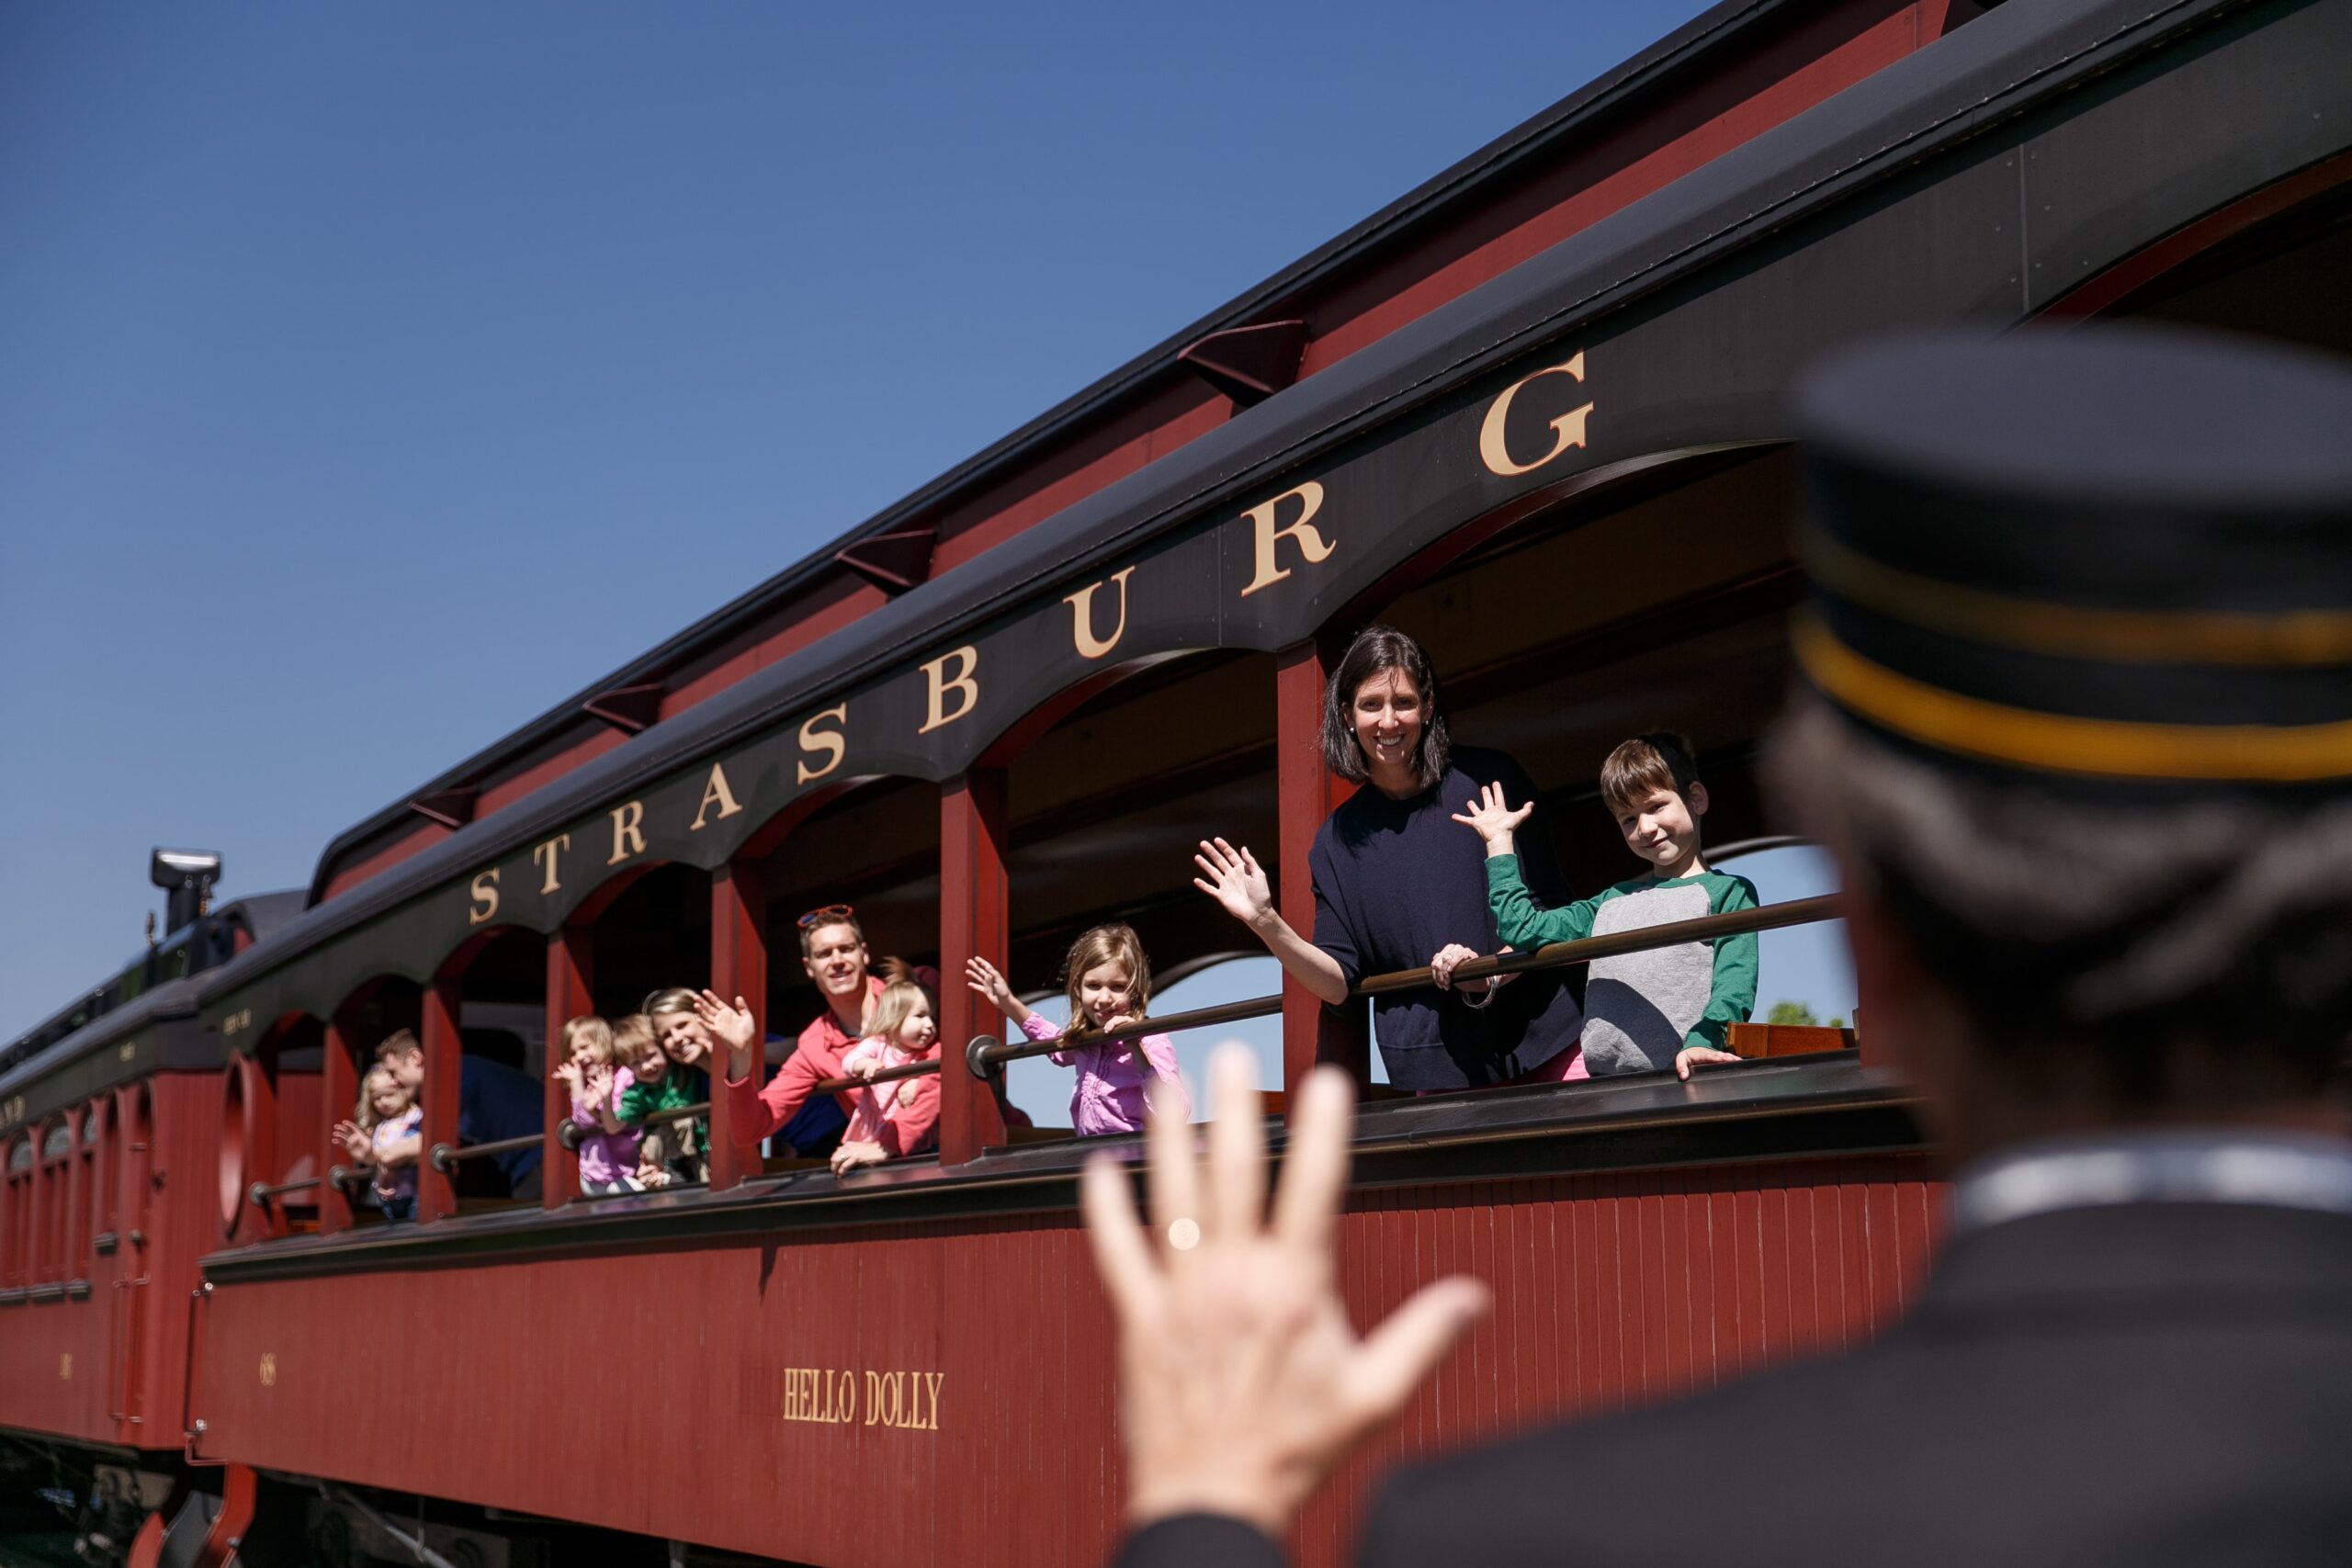 A railroad trainman waving to passengers aboard a train car waving back.